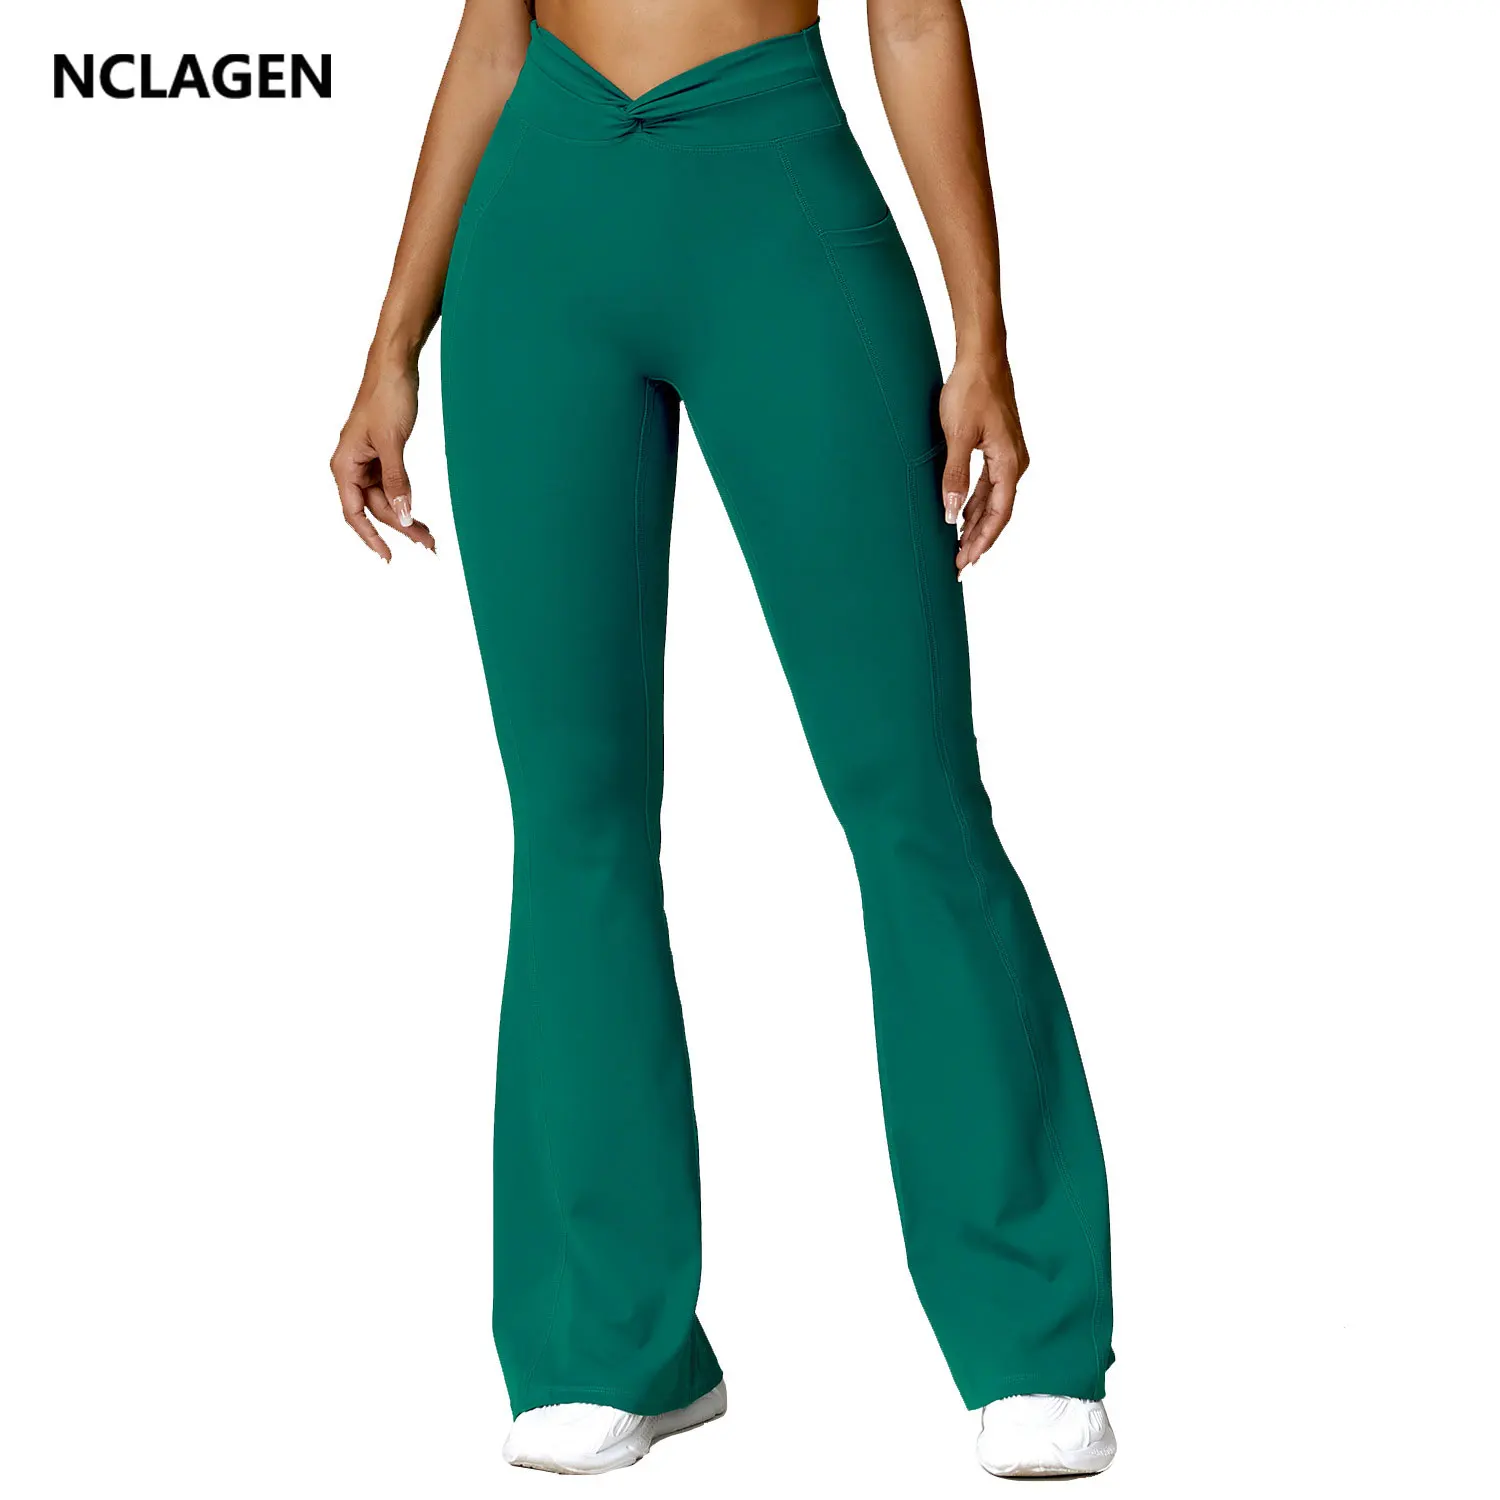 

NCLAGEN Yoga Pants Women's Pocket Hip Lifting High Waist Sports Wide Leg Flare Pants Leisure Fitness Micro Flare Bell-bottoms